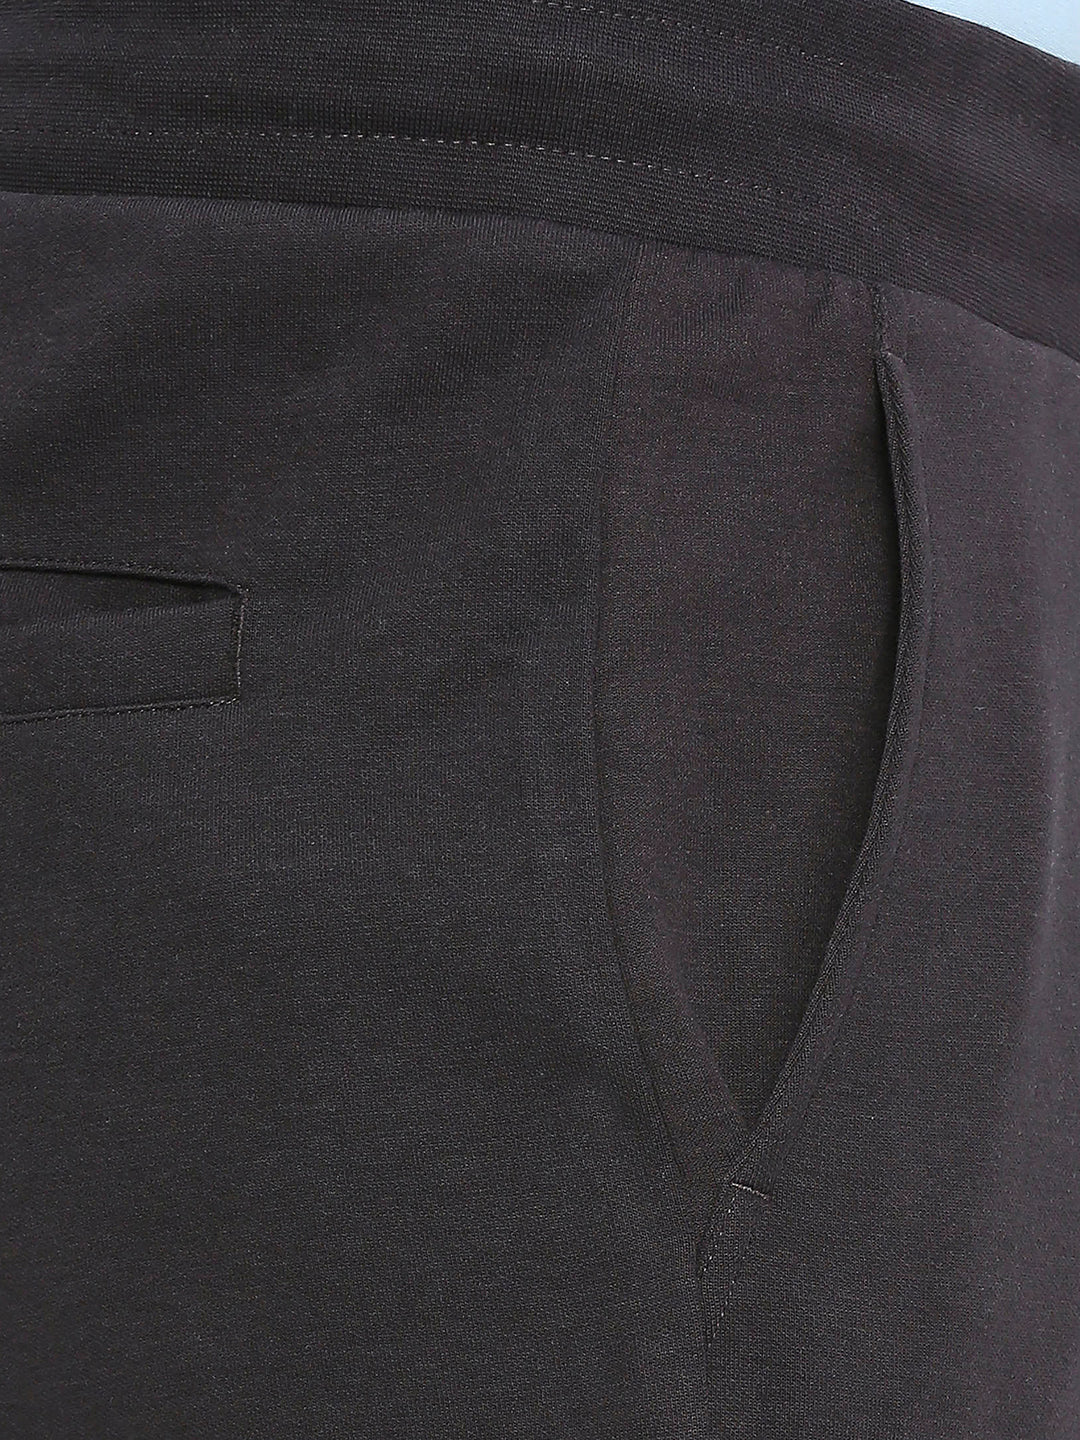 Men Premium Cotton Slate Grey Trackpant - UnderJeans by Spykar